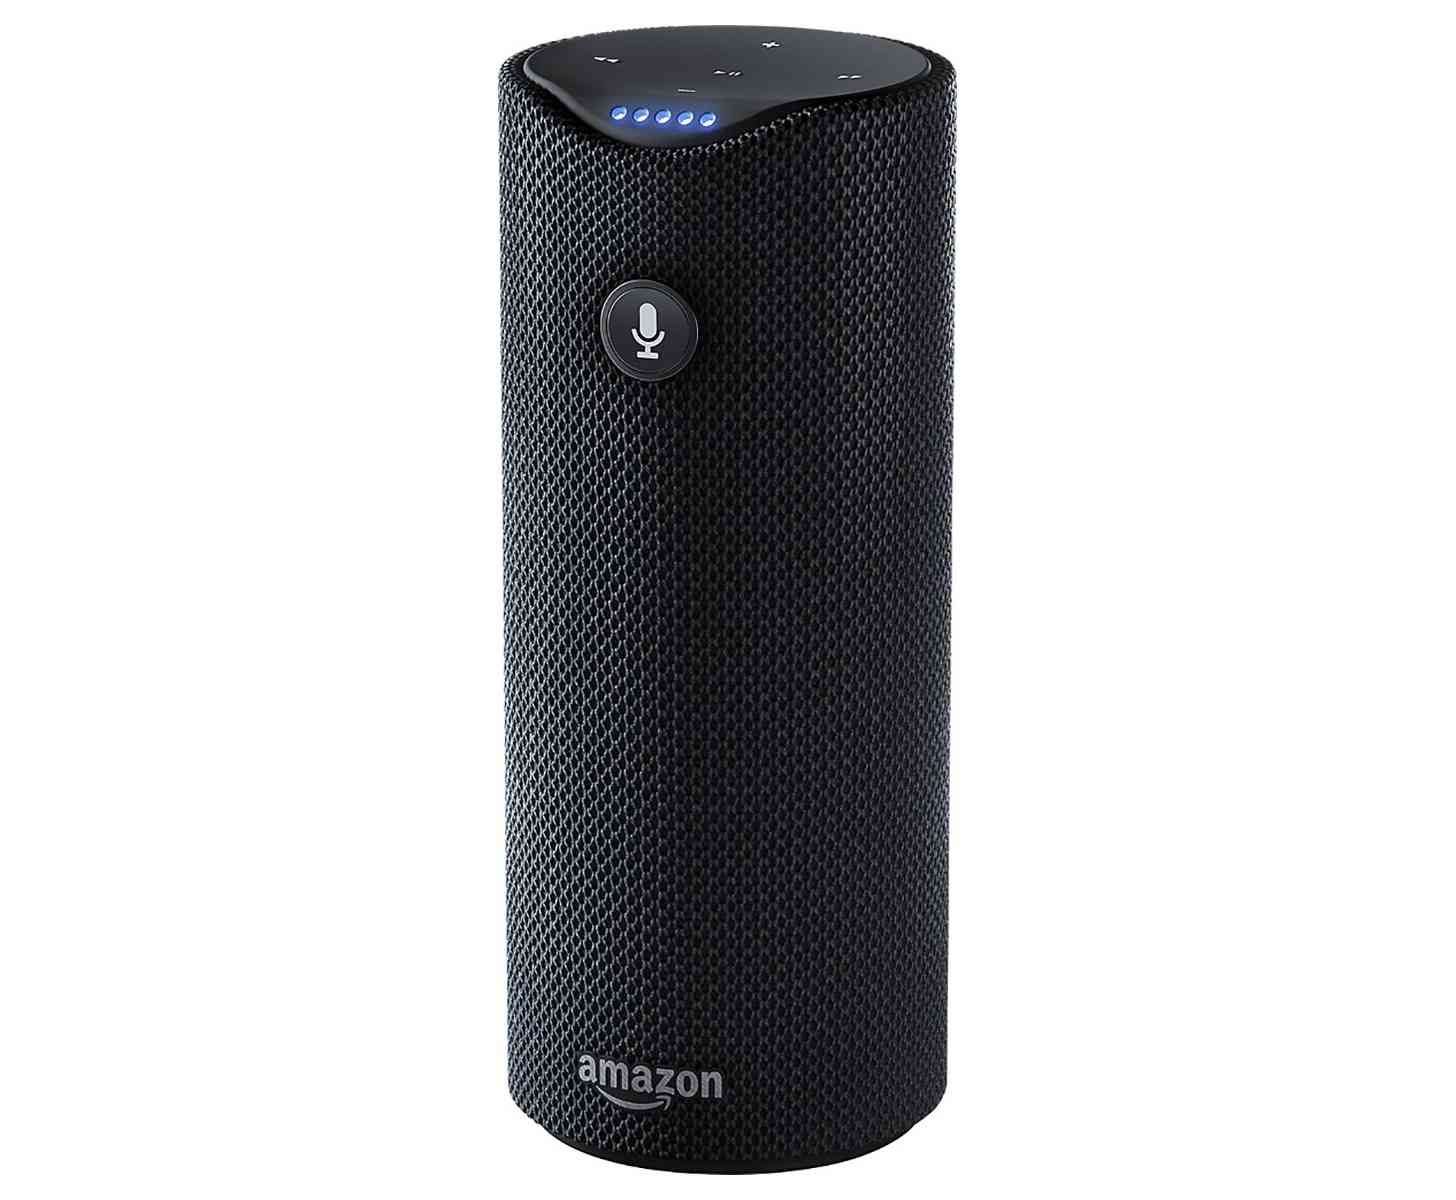 Amazon Tap official portable Echo